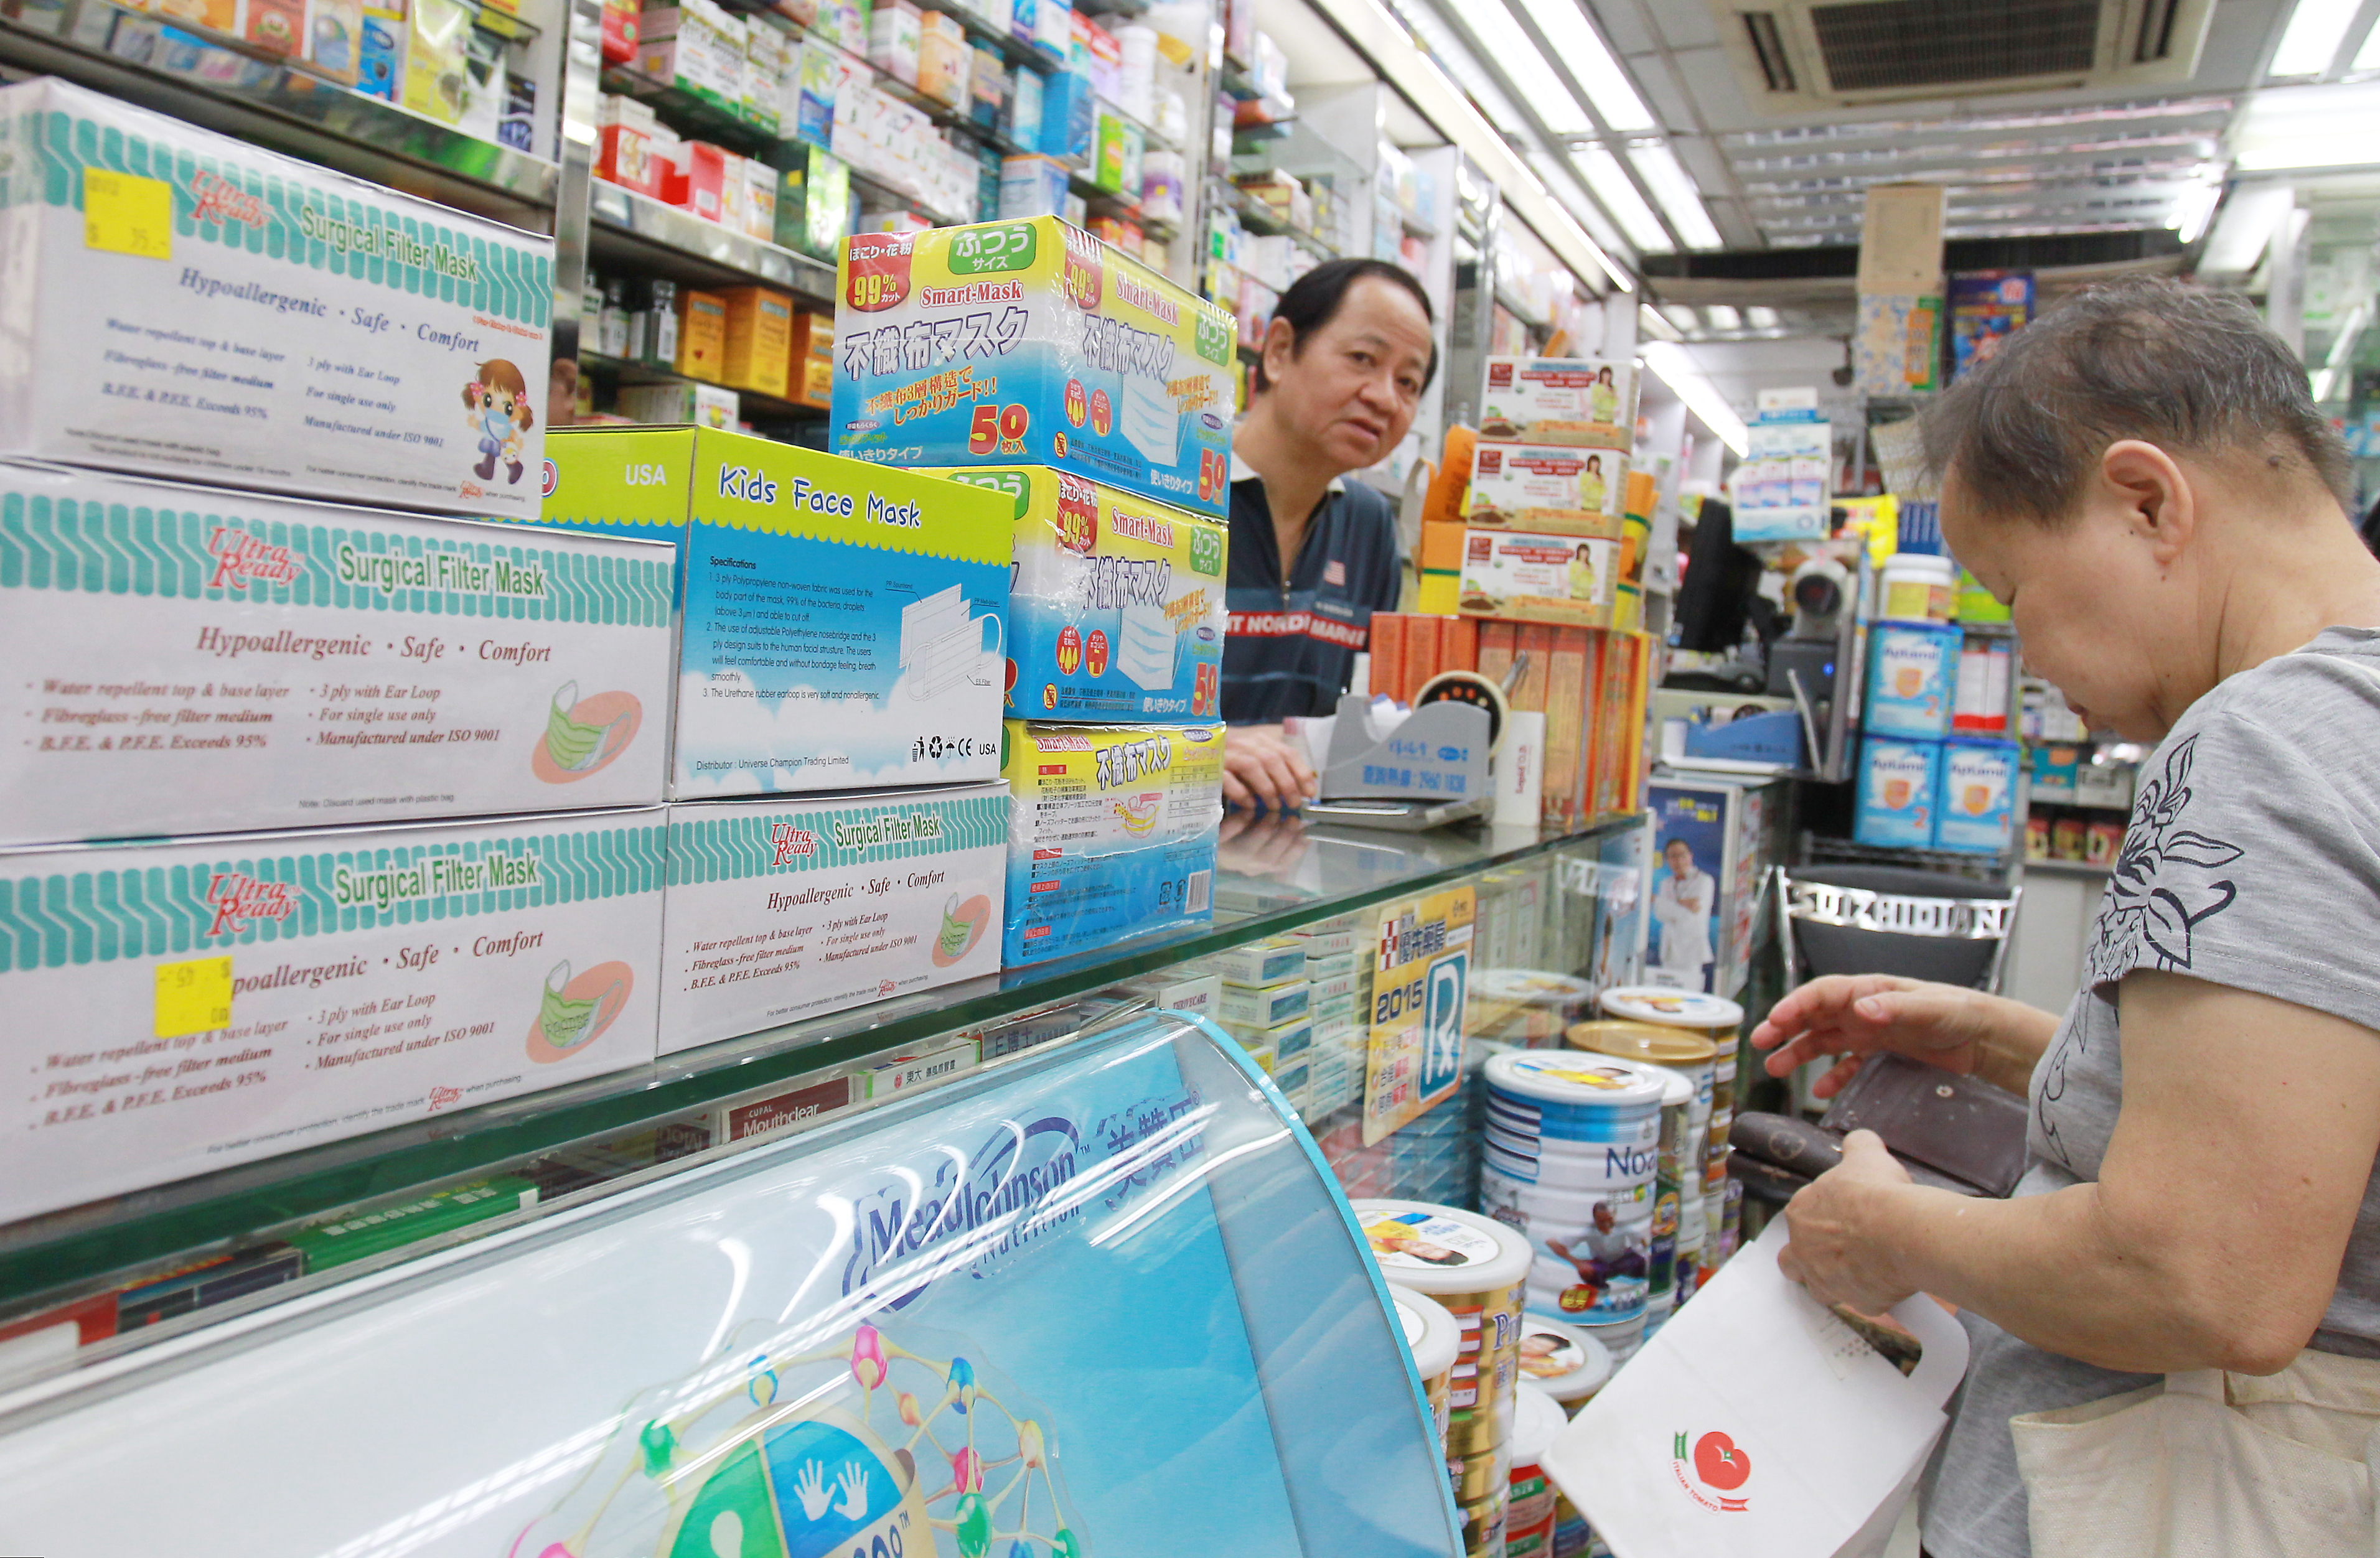 Pharmacy shops in Hong Kong are facing tough times. Photo: May Tse